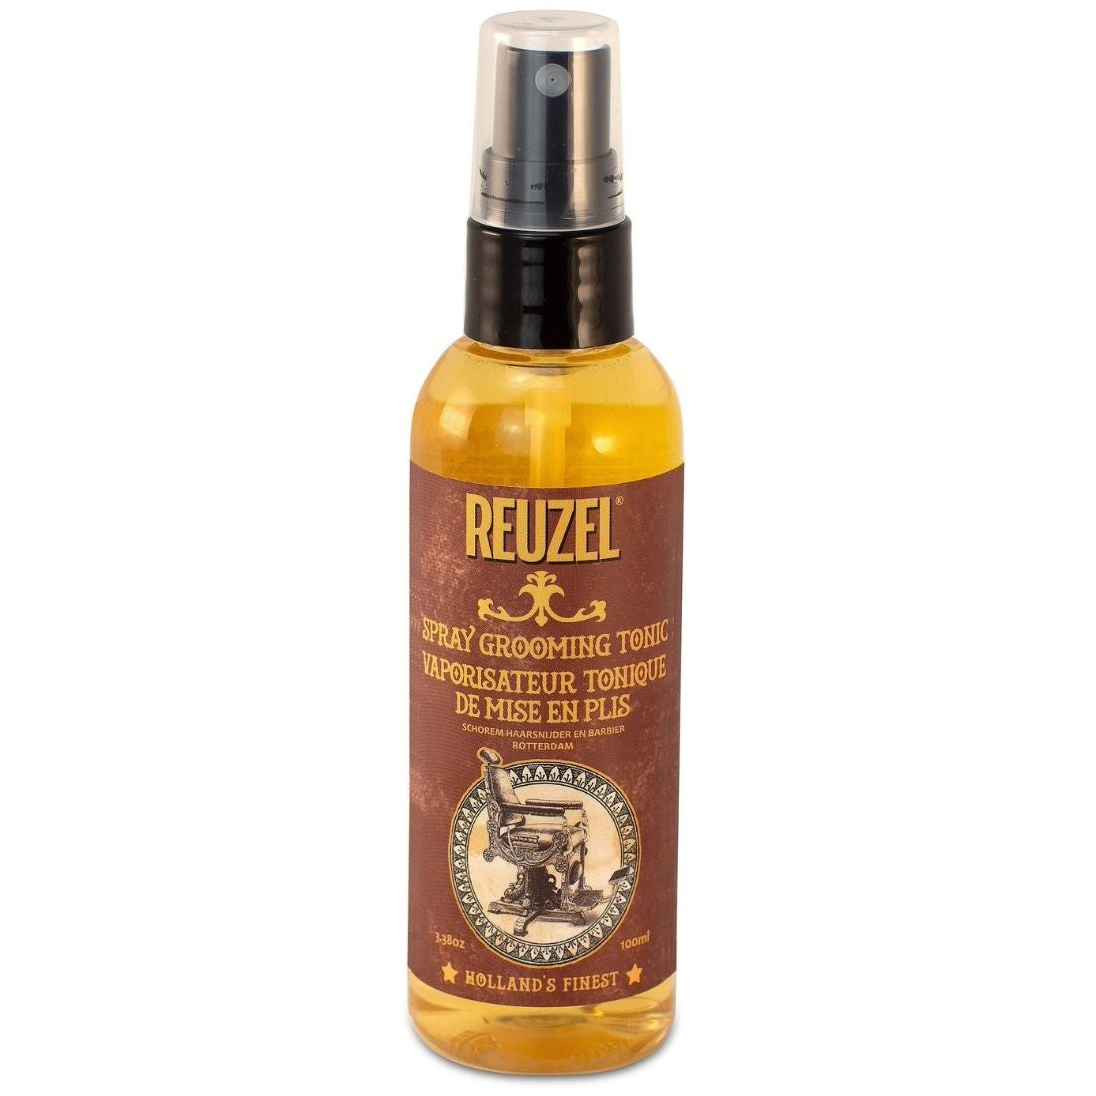 Reuzel Spray Grooming Tonic 3.38oz